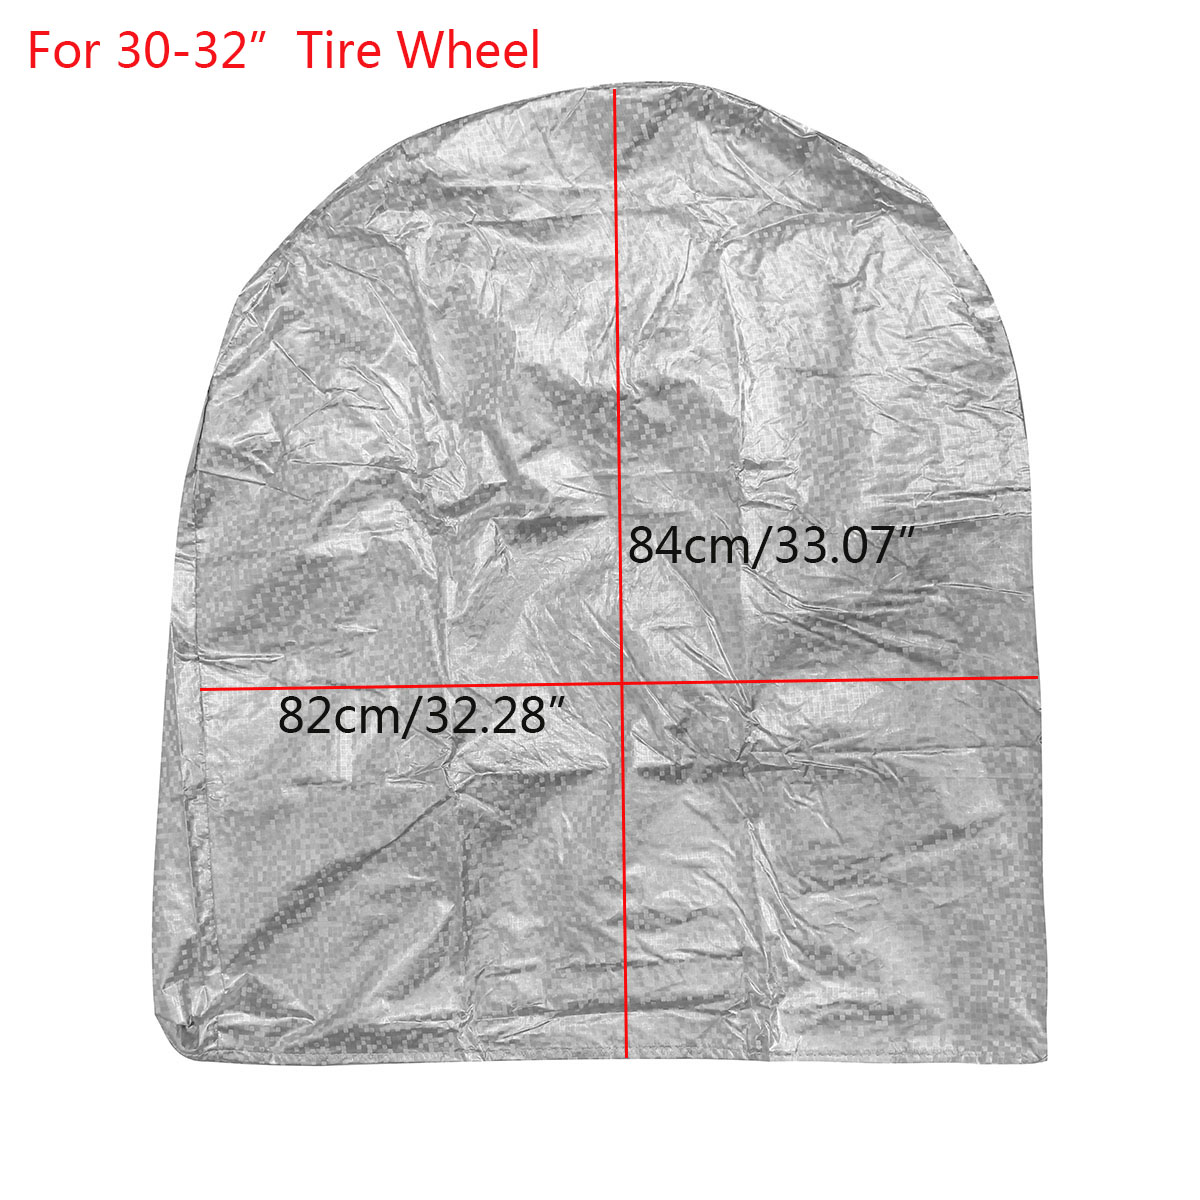 24-26-27-29-30-32-Non-Woven-Fabric-Car-Wheel-Tire-Cover-for-RV-Trailer-Camper-Car-Truck-Trailer-1418647